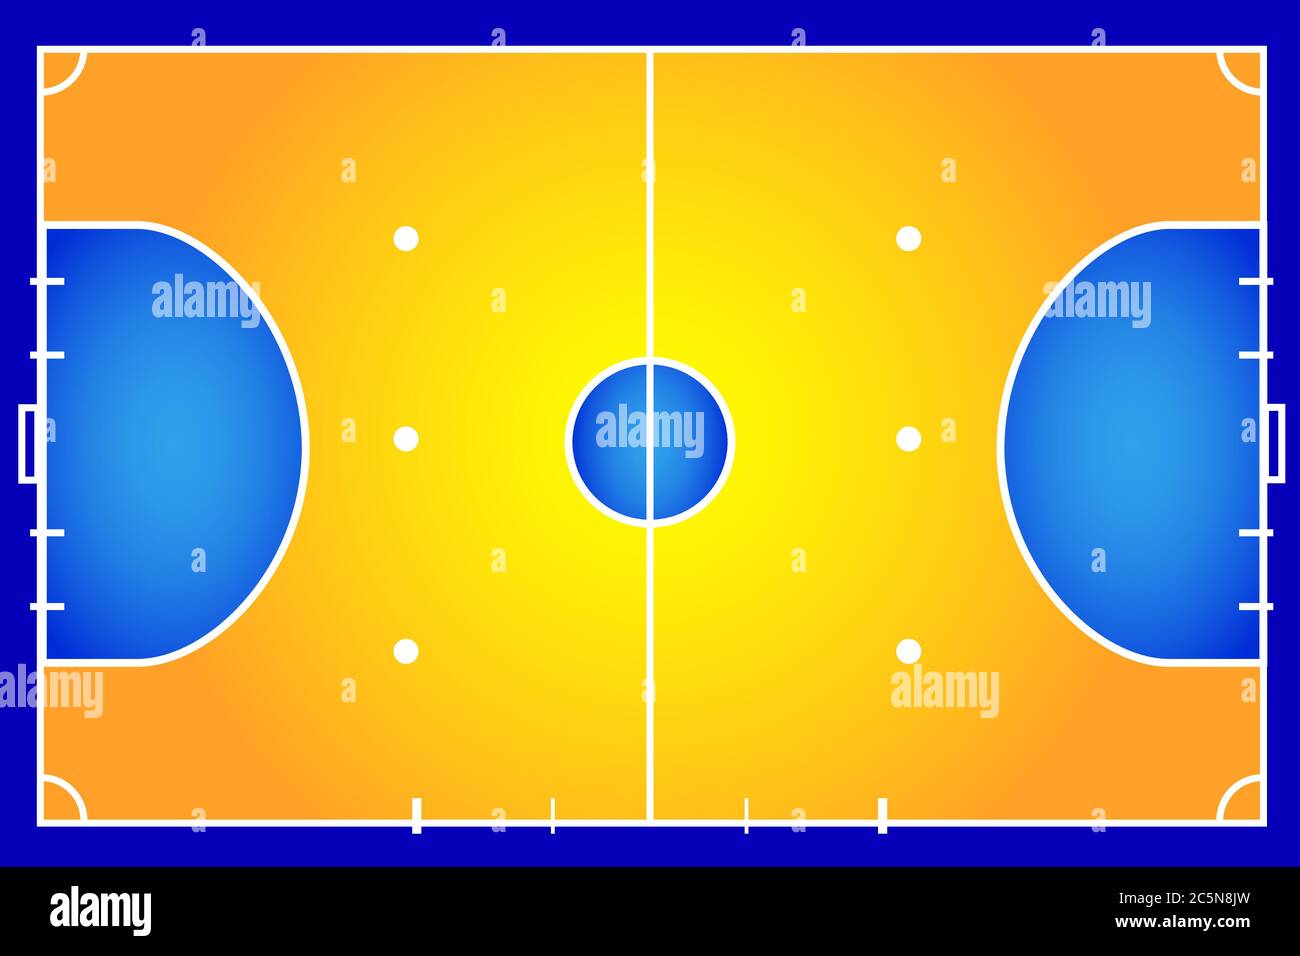 Futsal indoor outdoor court background vector illustration layout Stock Vector